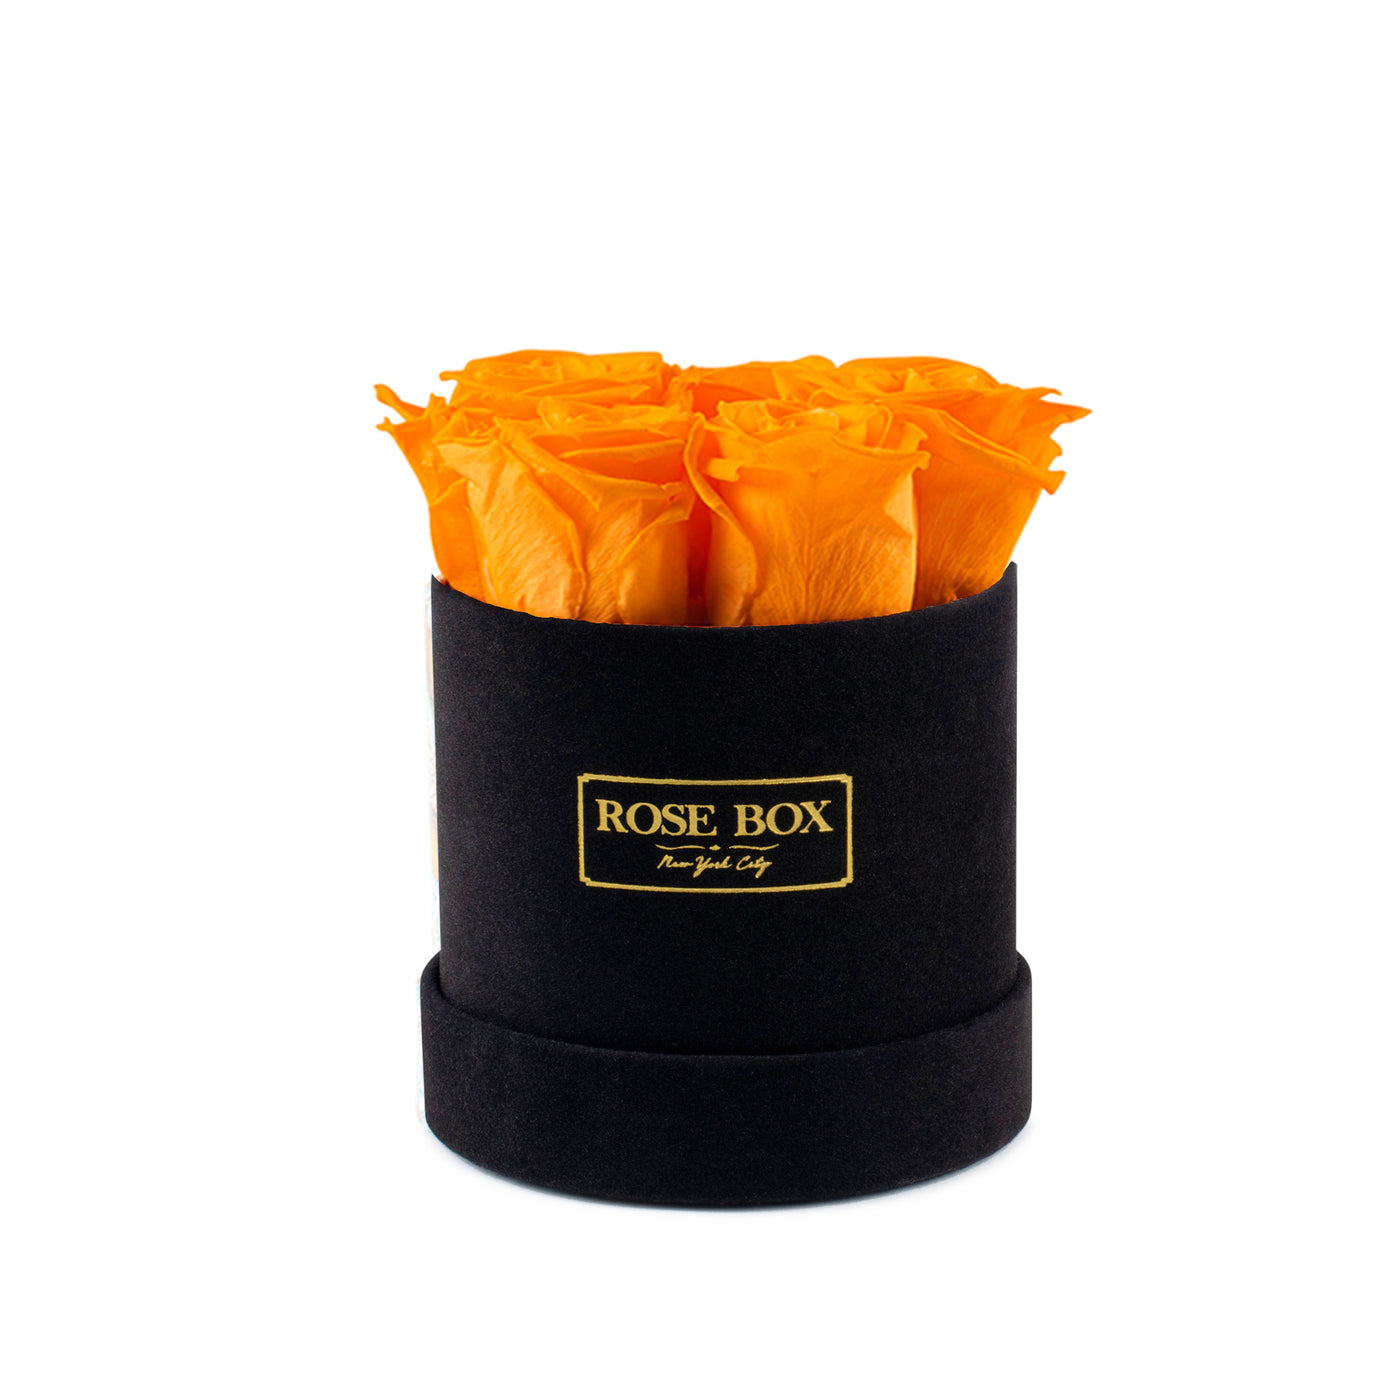 Mini Black Box with Autumnal Orange Roses